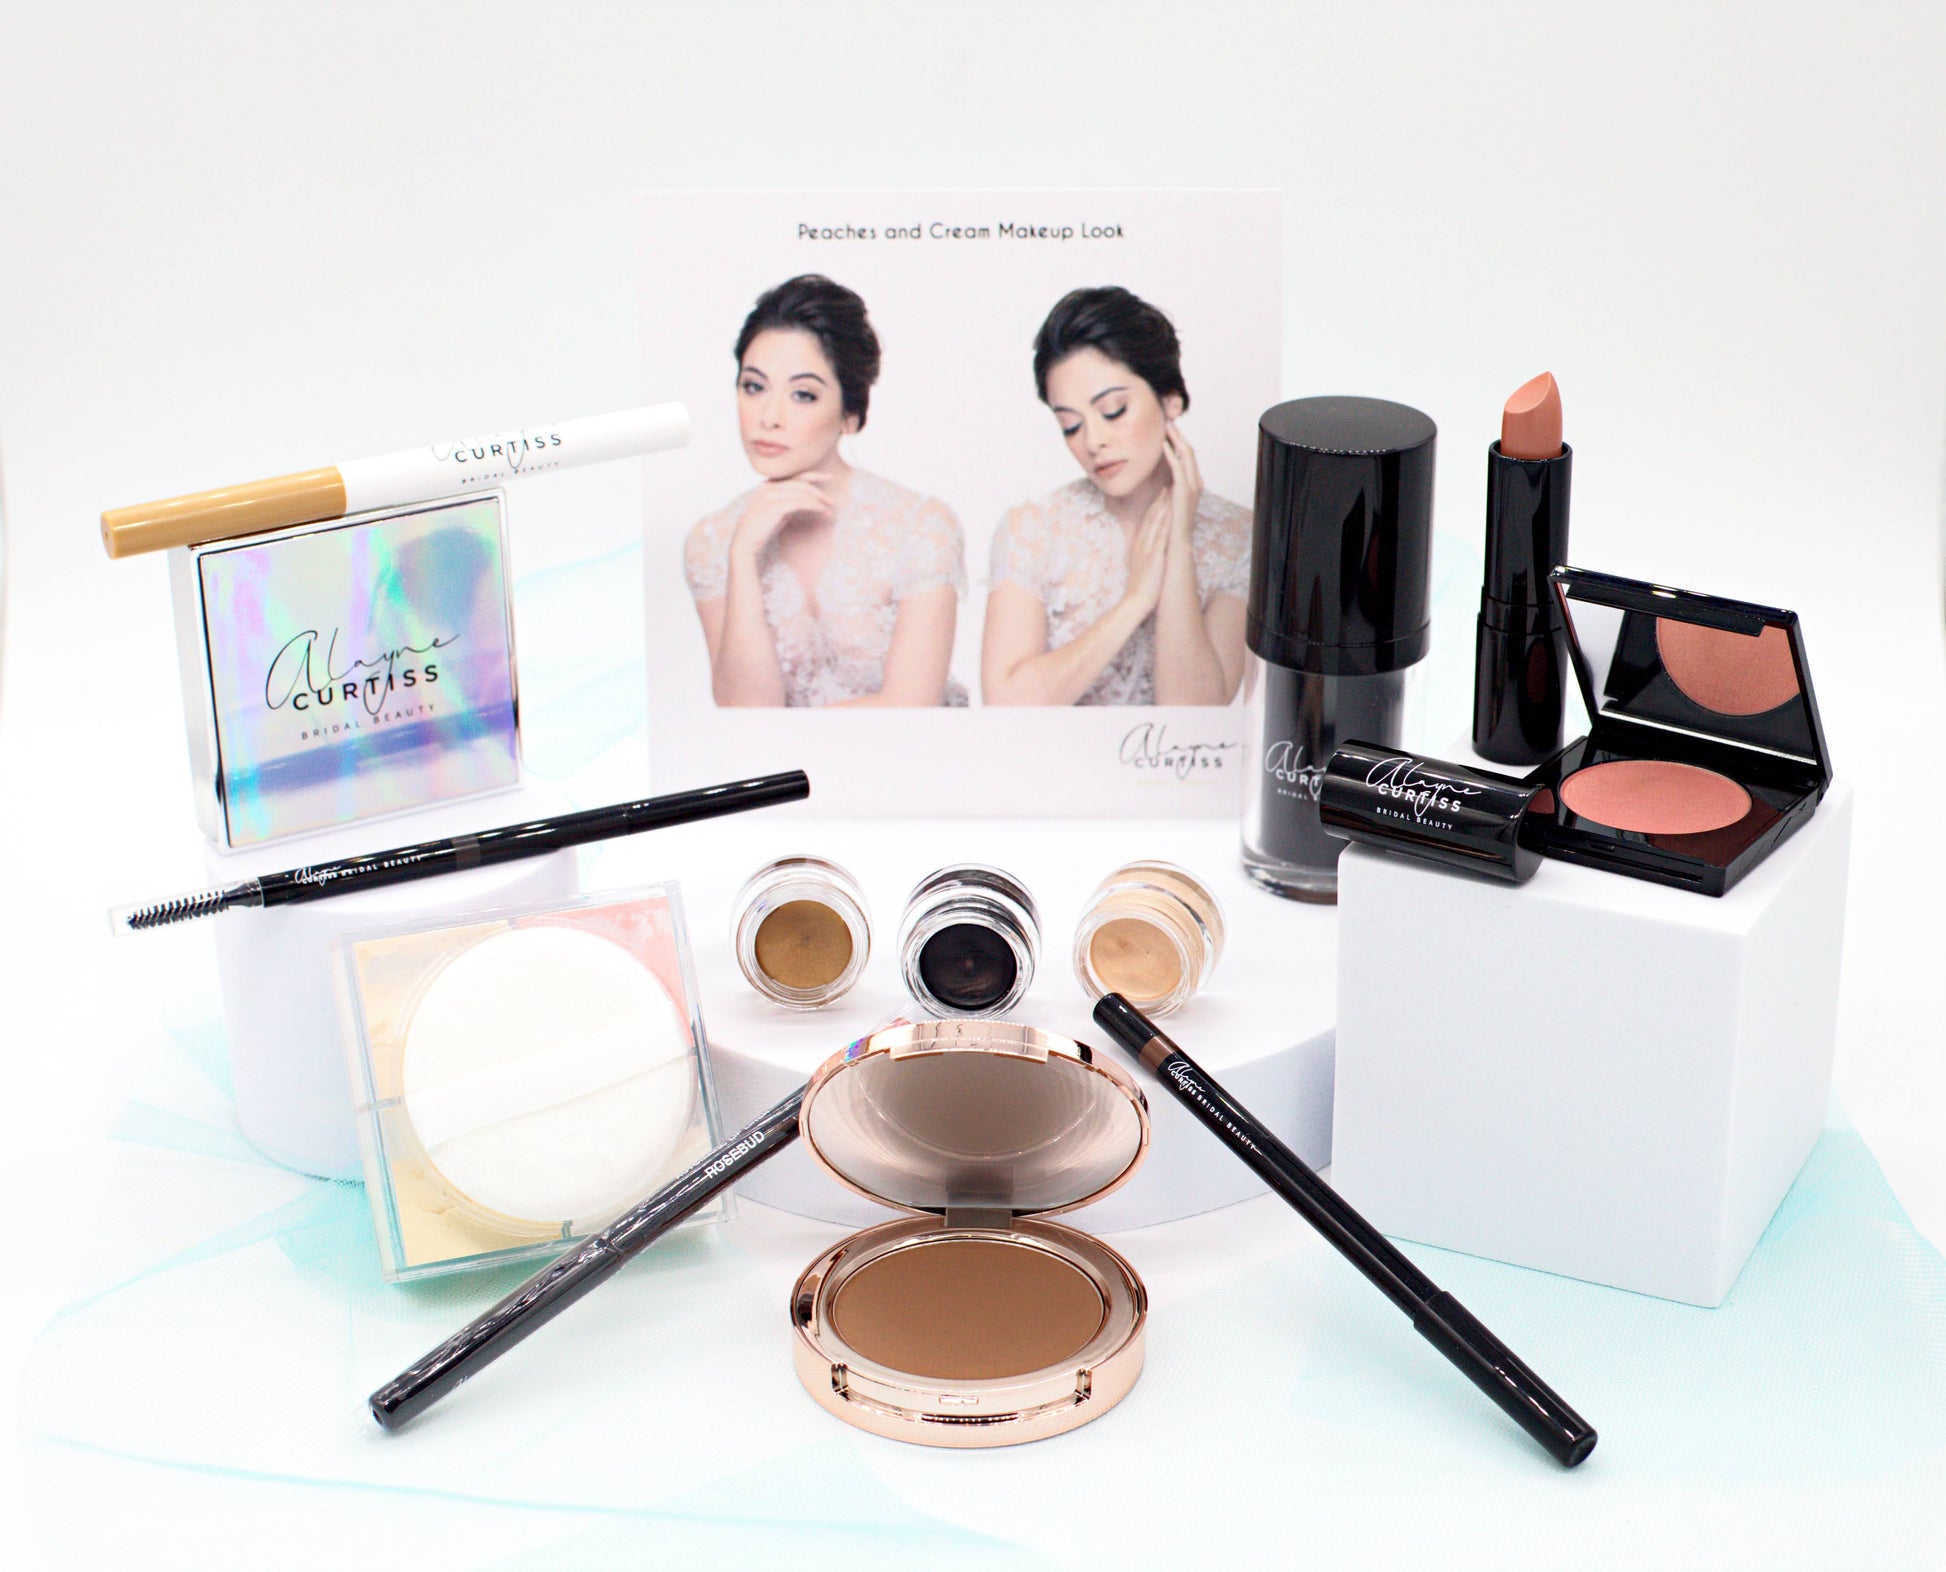 Expanded ProClass Makeup Kit – Graftobian Make-Up Company